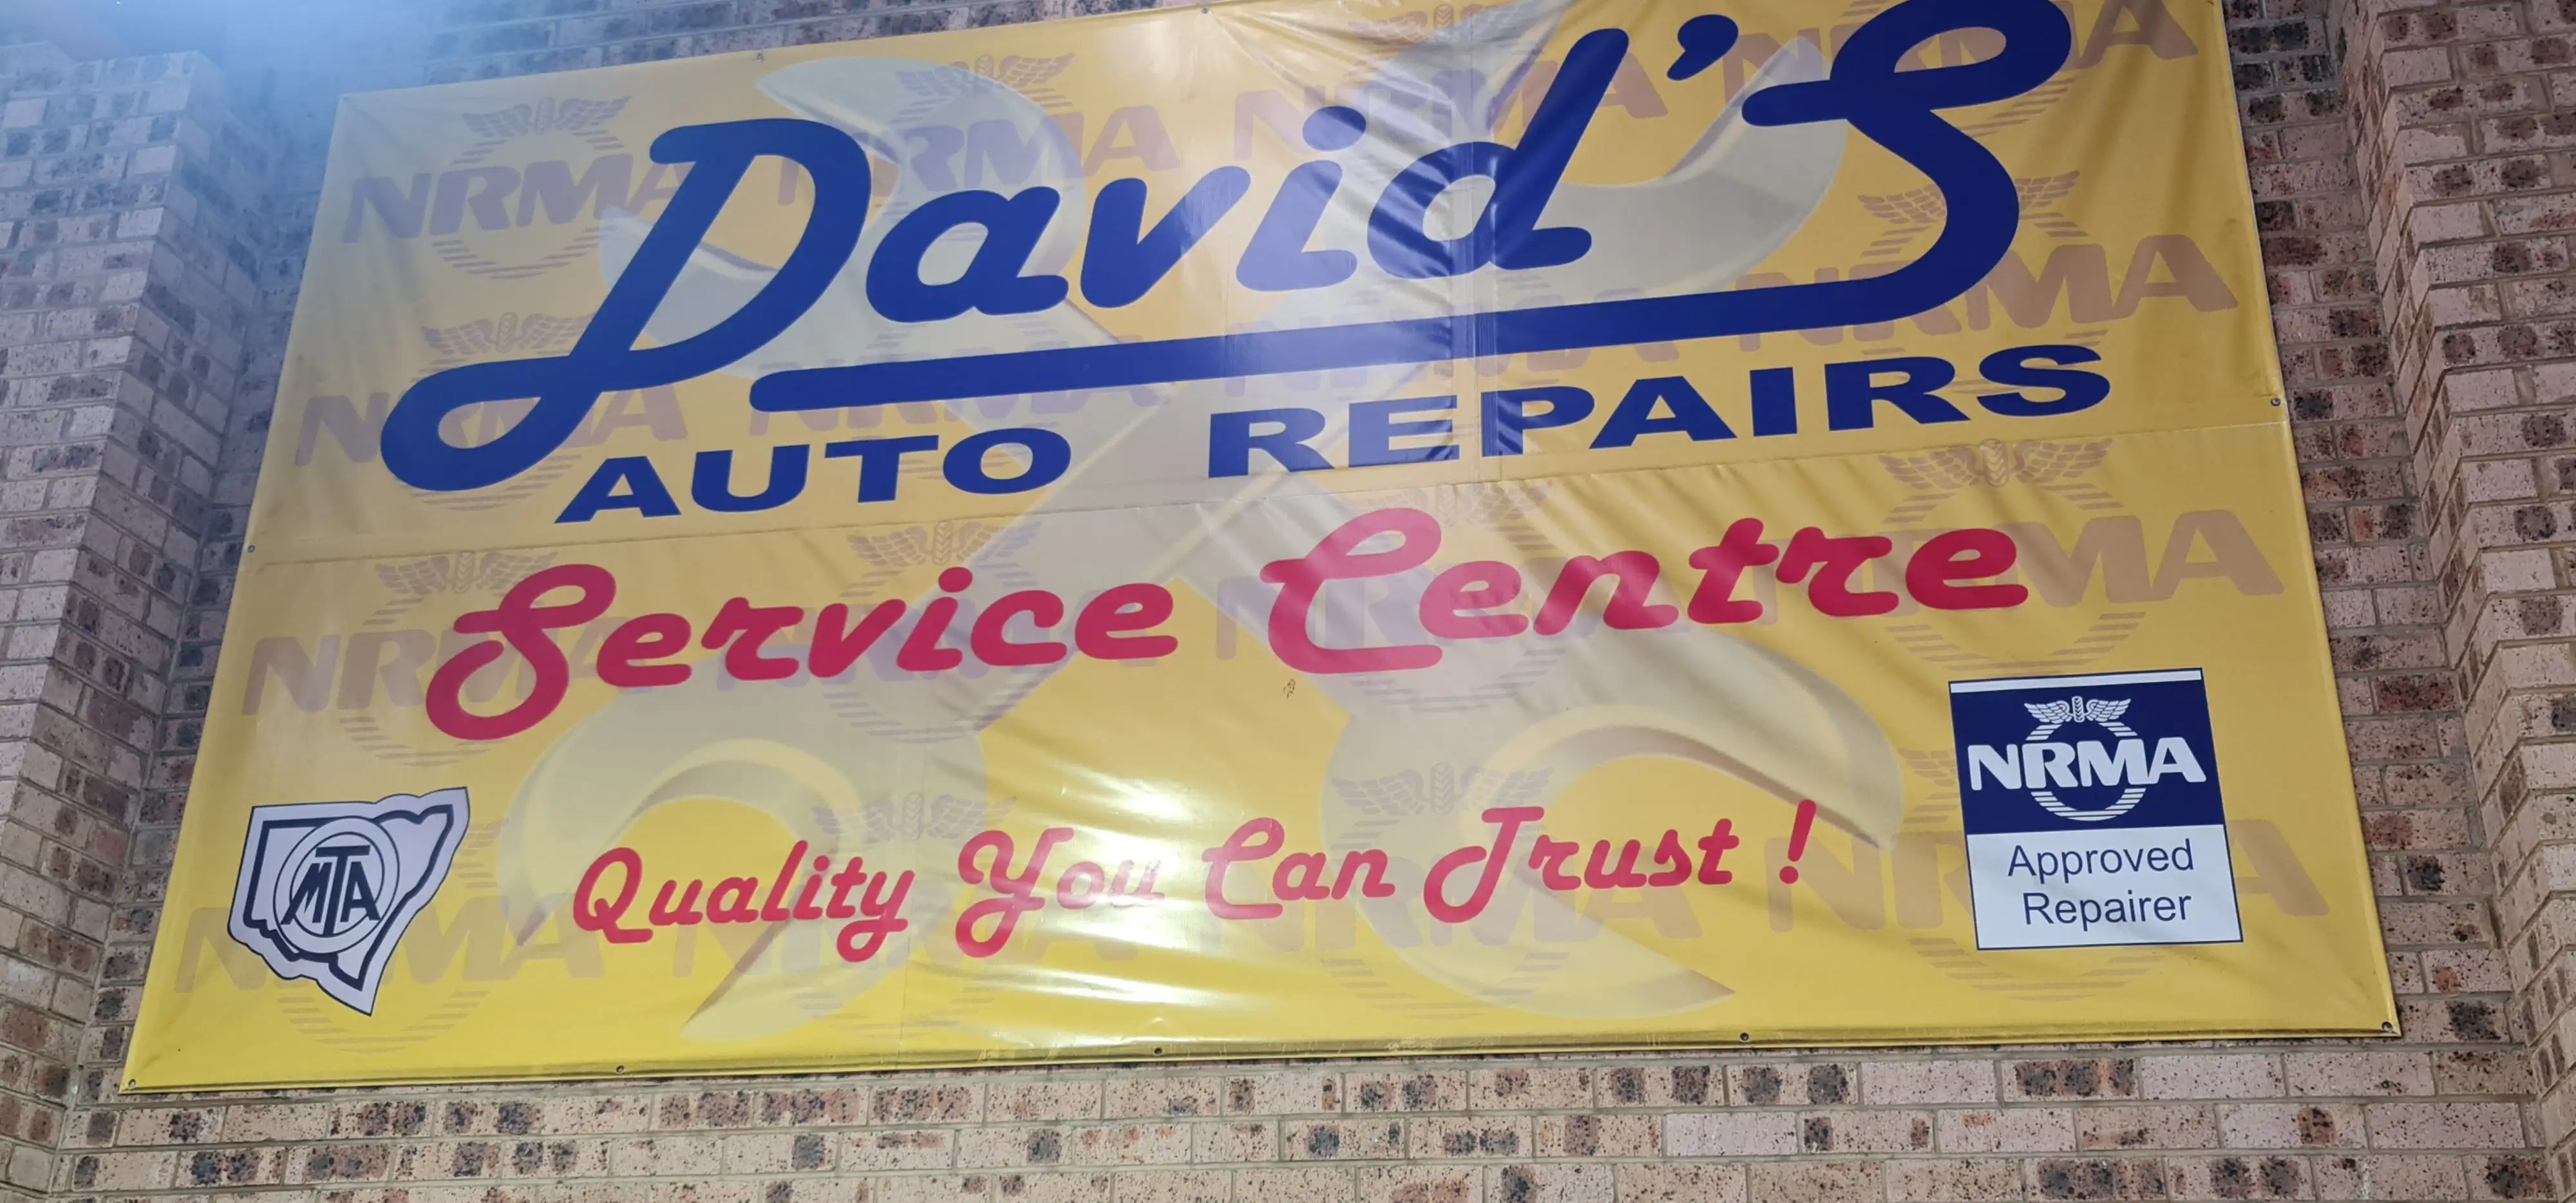 Gallery Davids Auto Repair